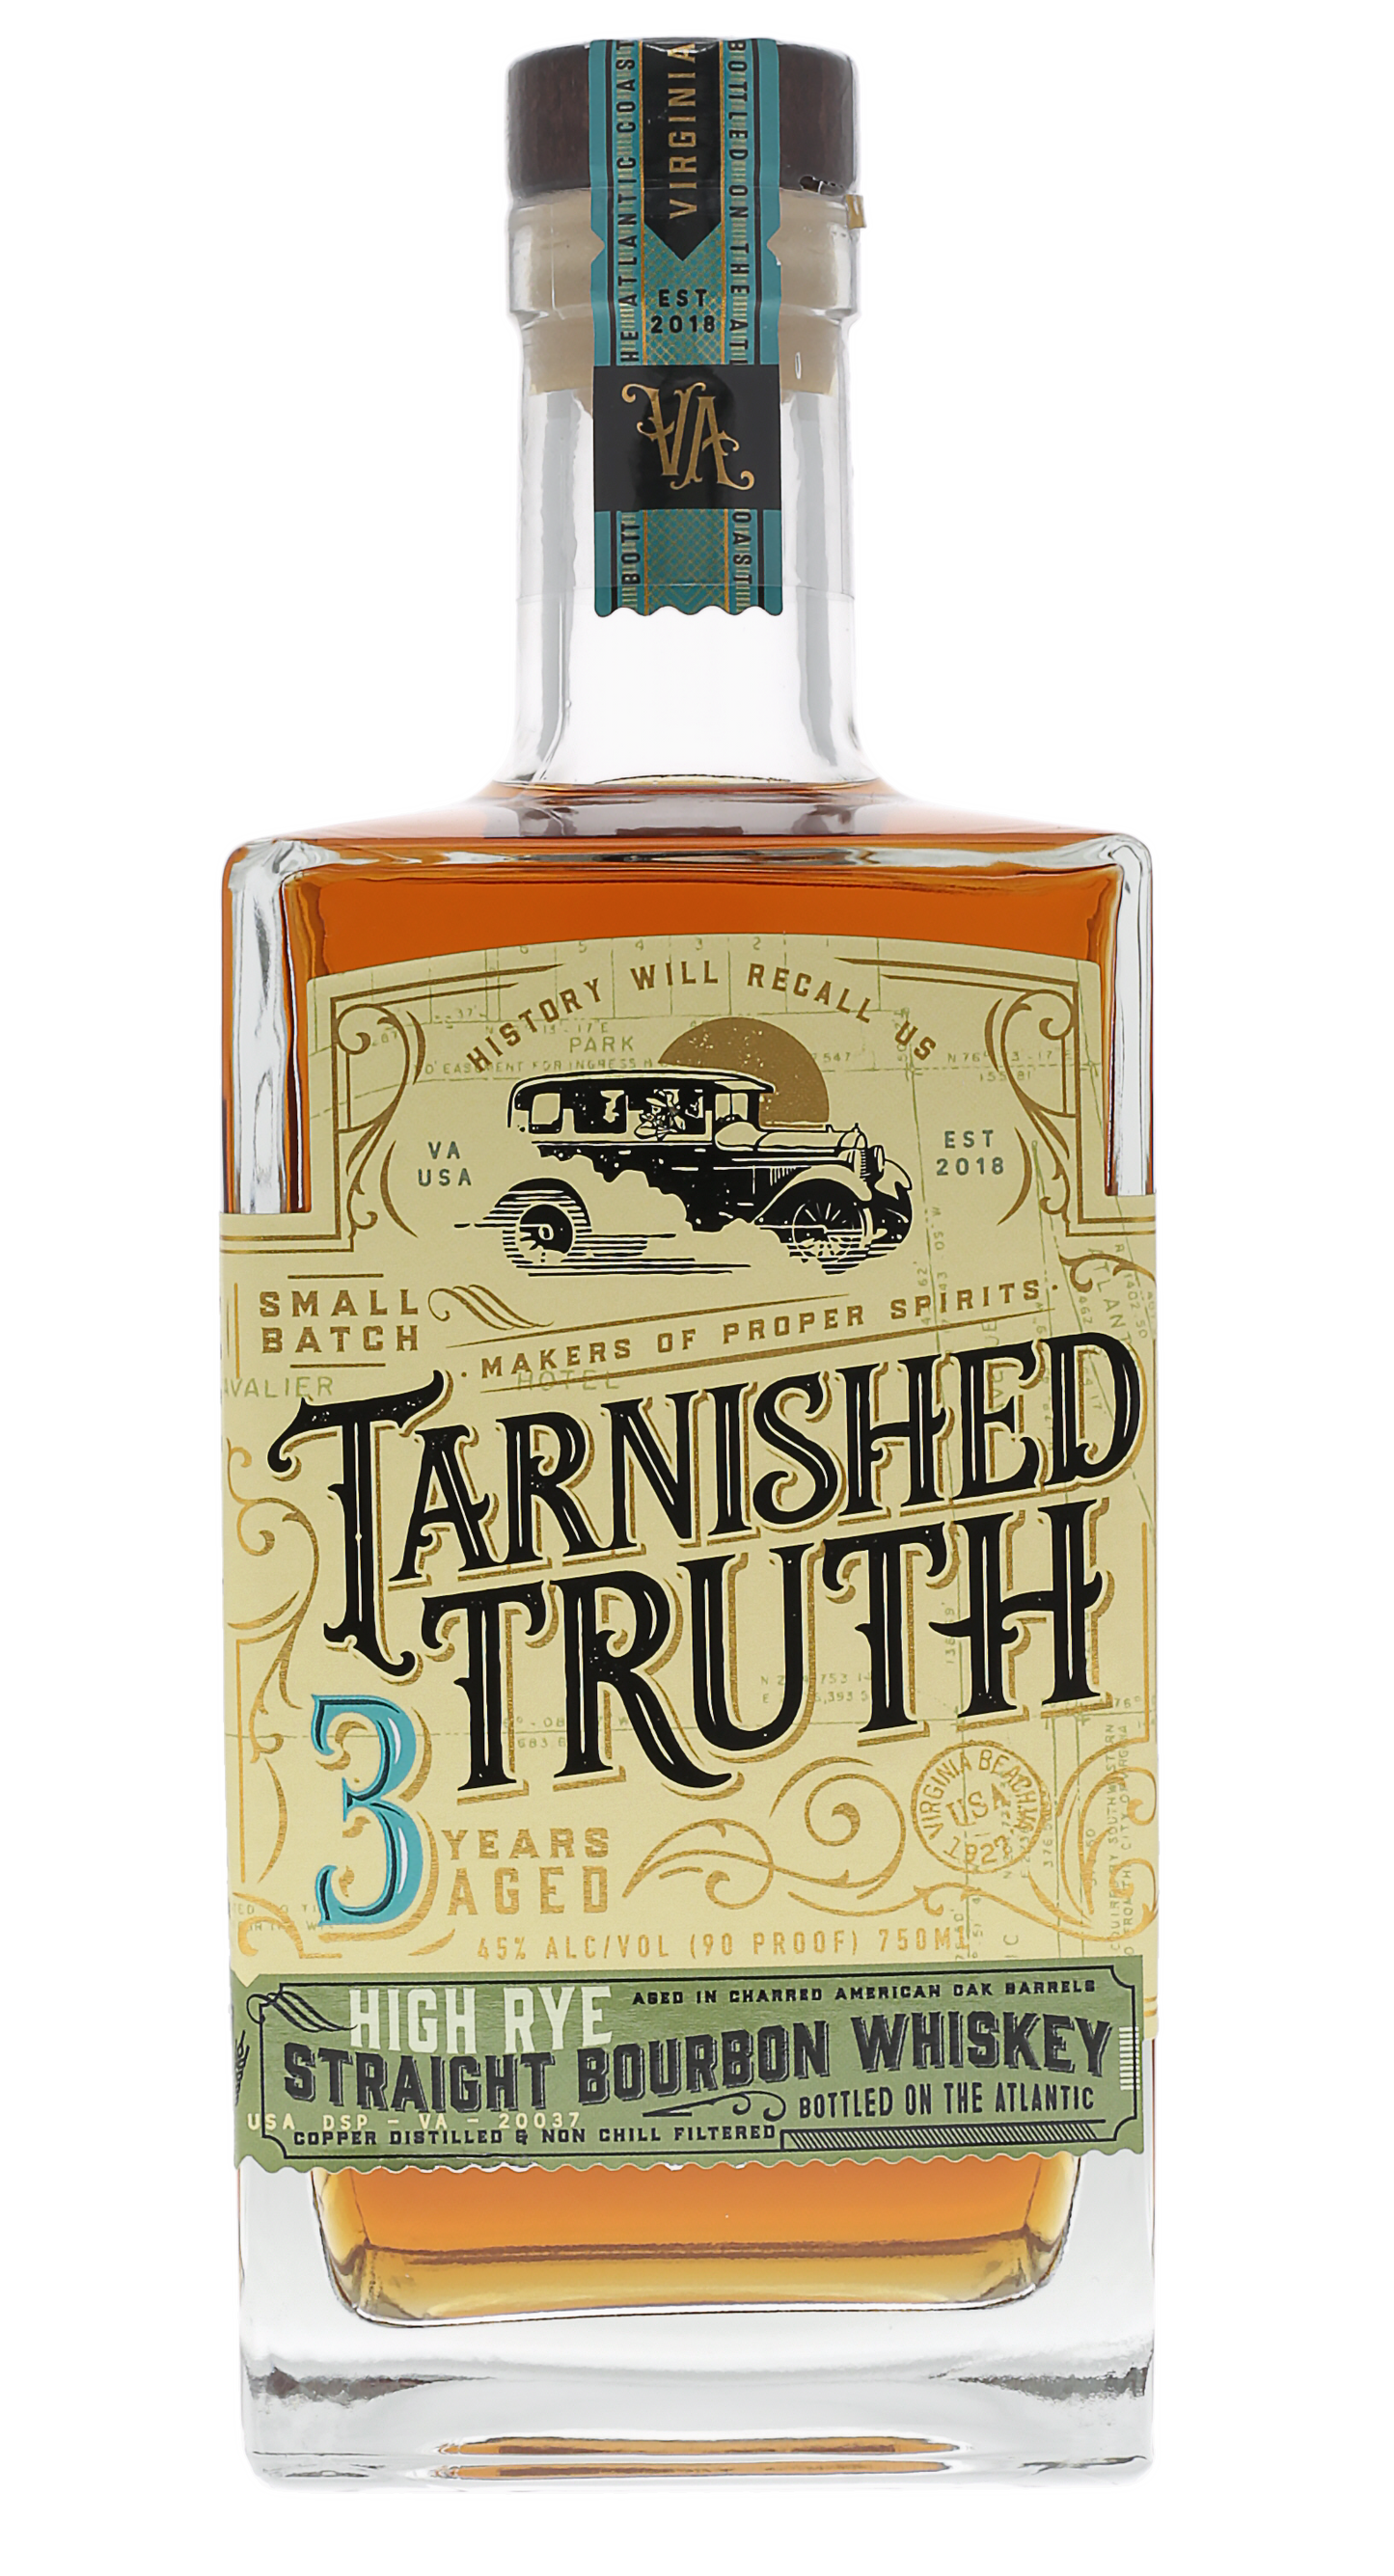 Tarnished Truth High Rye Bourbon